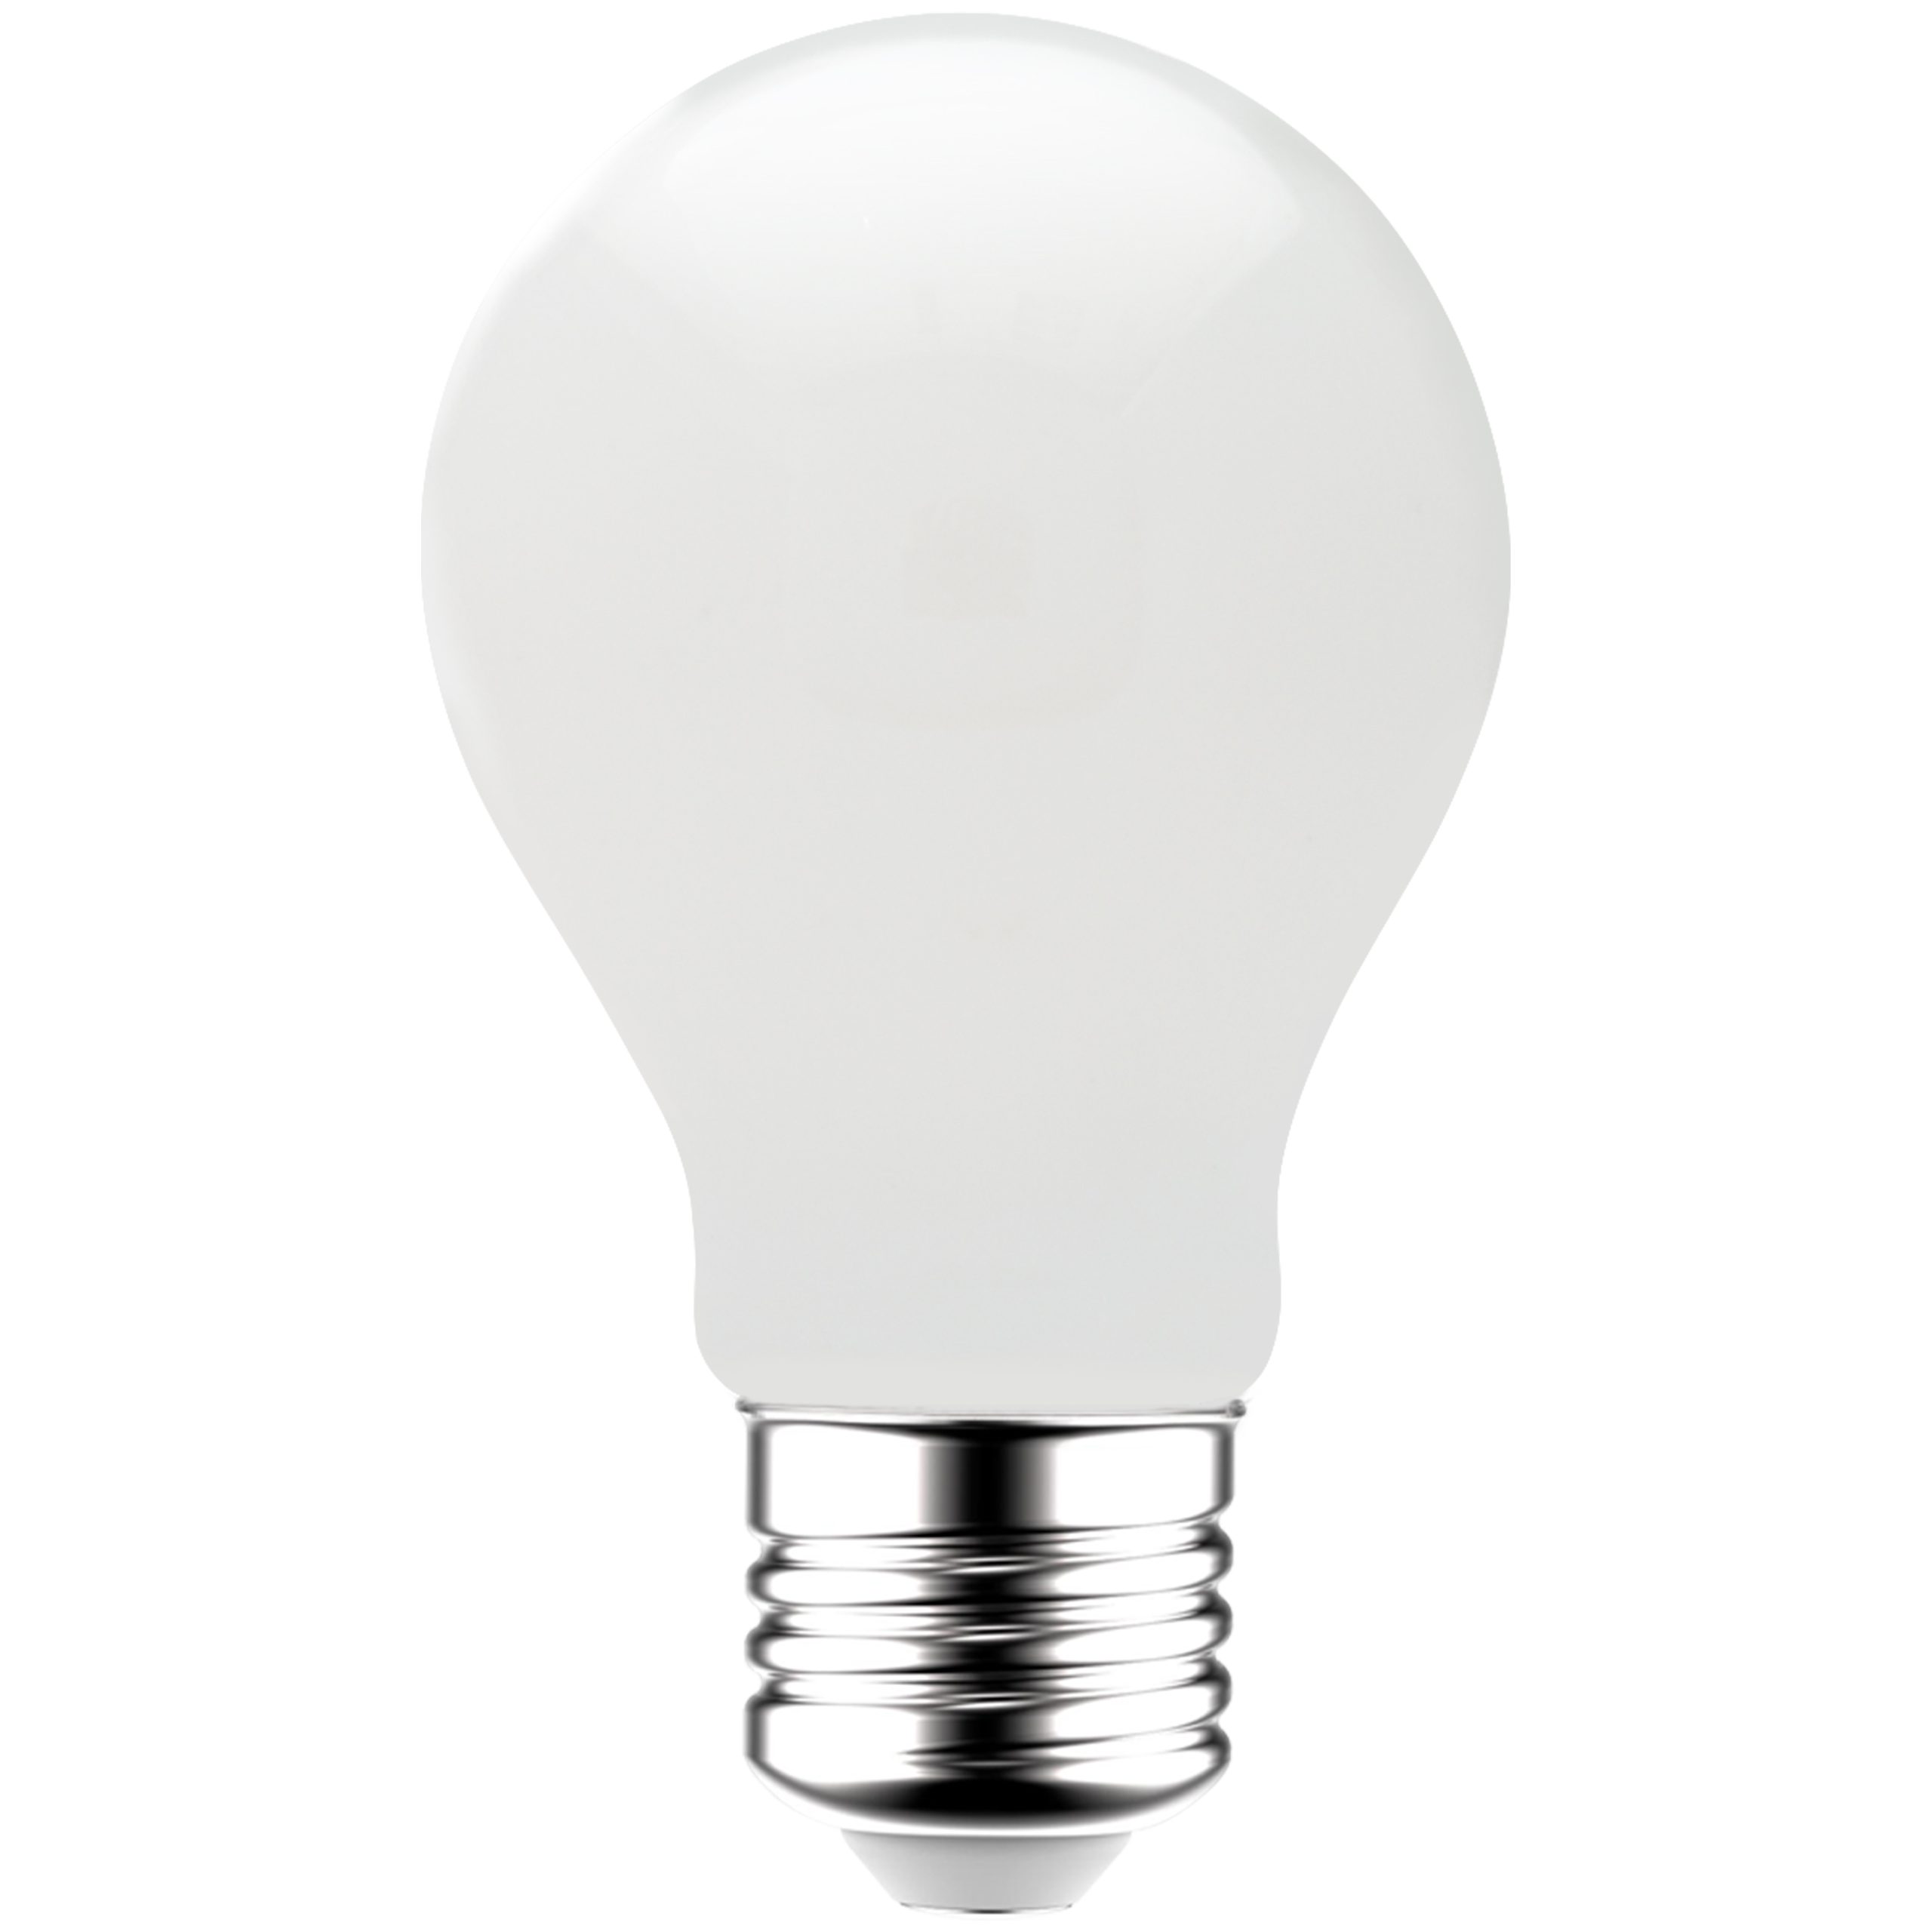 LED's light LED-Leuchtmittel 0611121 LED-Birne, E27, E27 mit  Dämmerungssensor 7,3 Watt warmweiß AUTO EIN/AUS